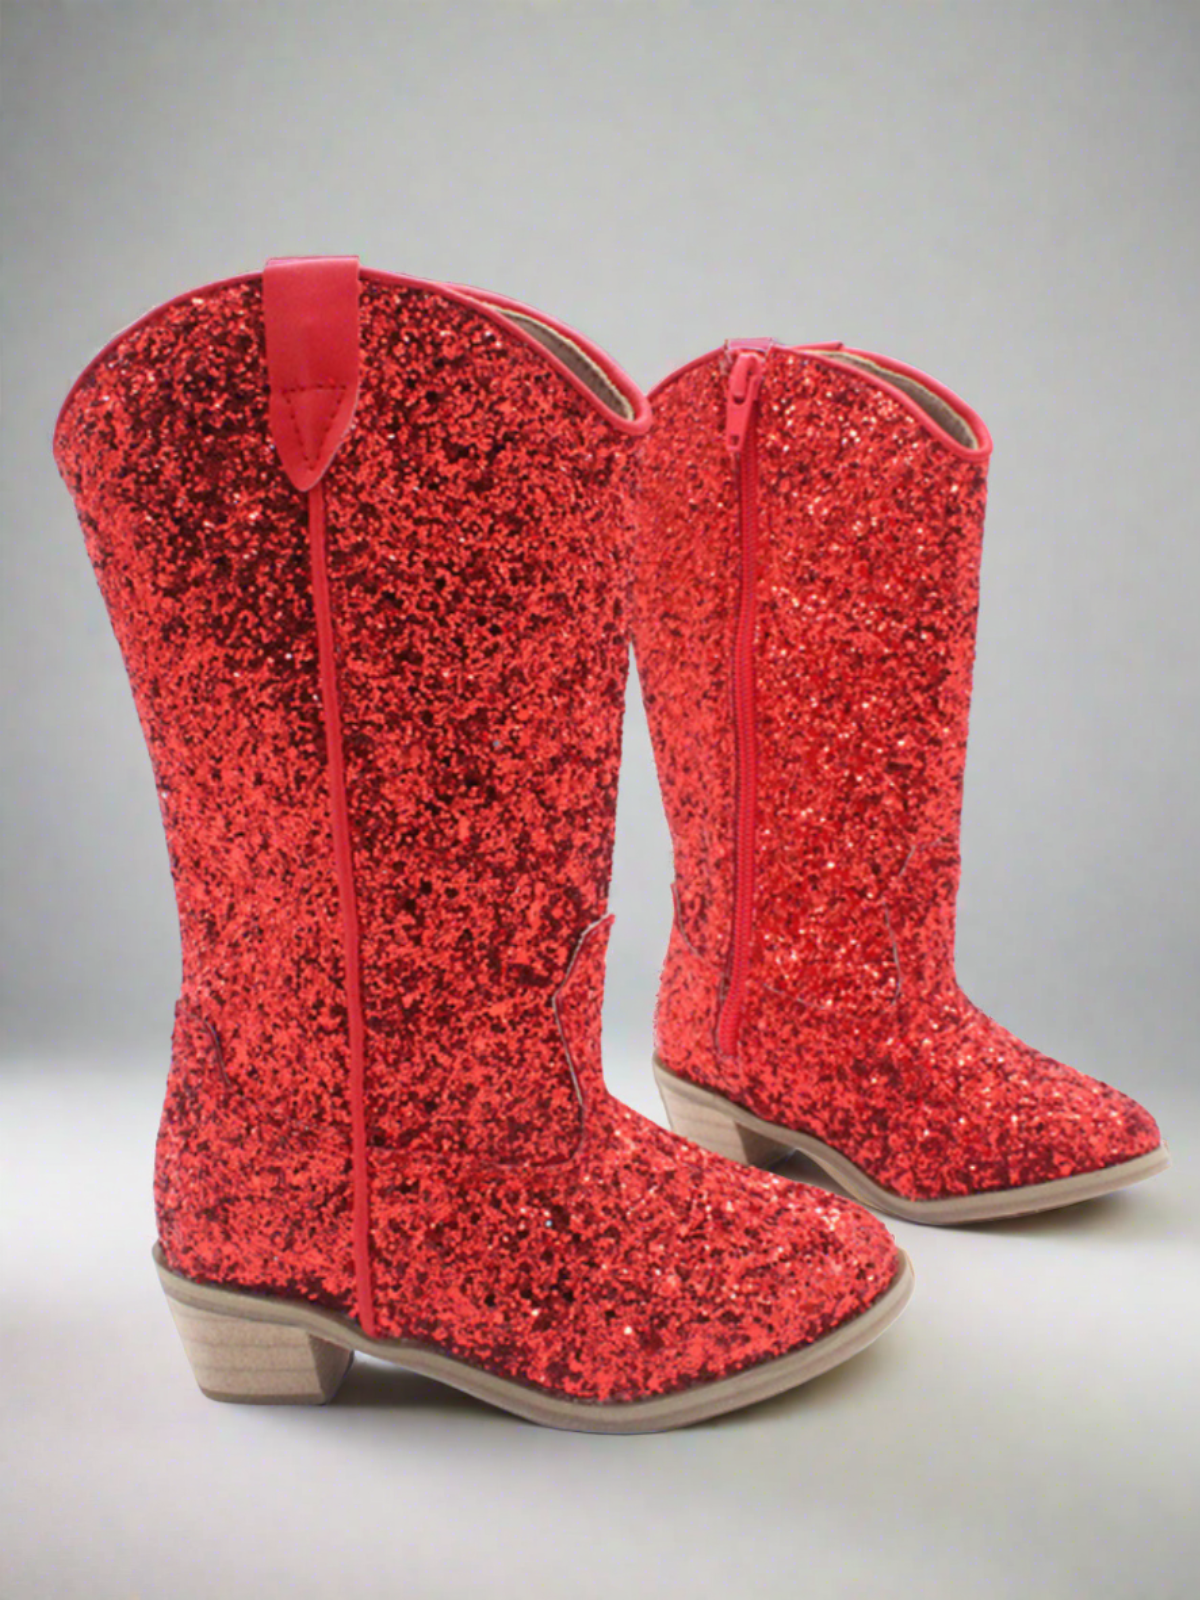 Kids Shoes By Liv & Mia | Girls Glittery Knee High Cowboy Boots 